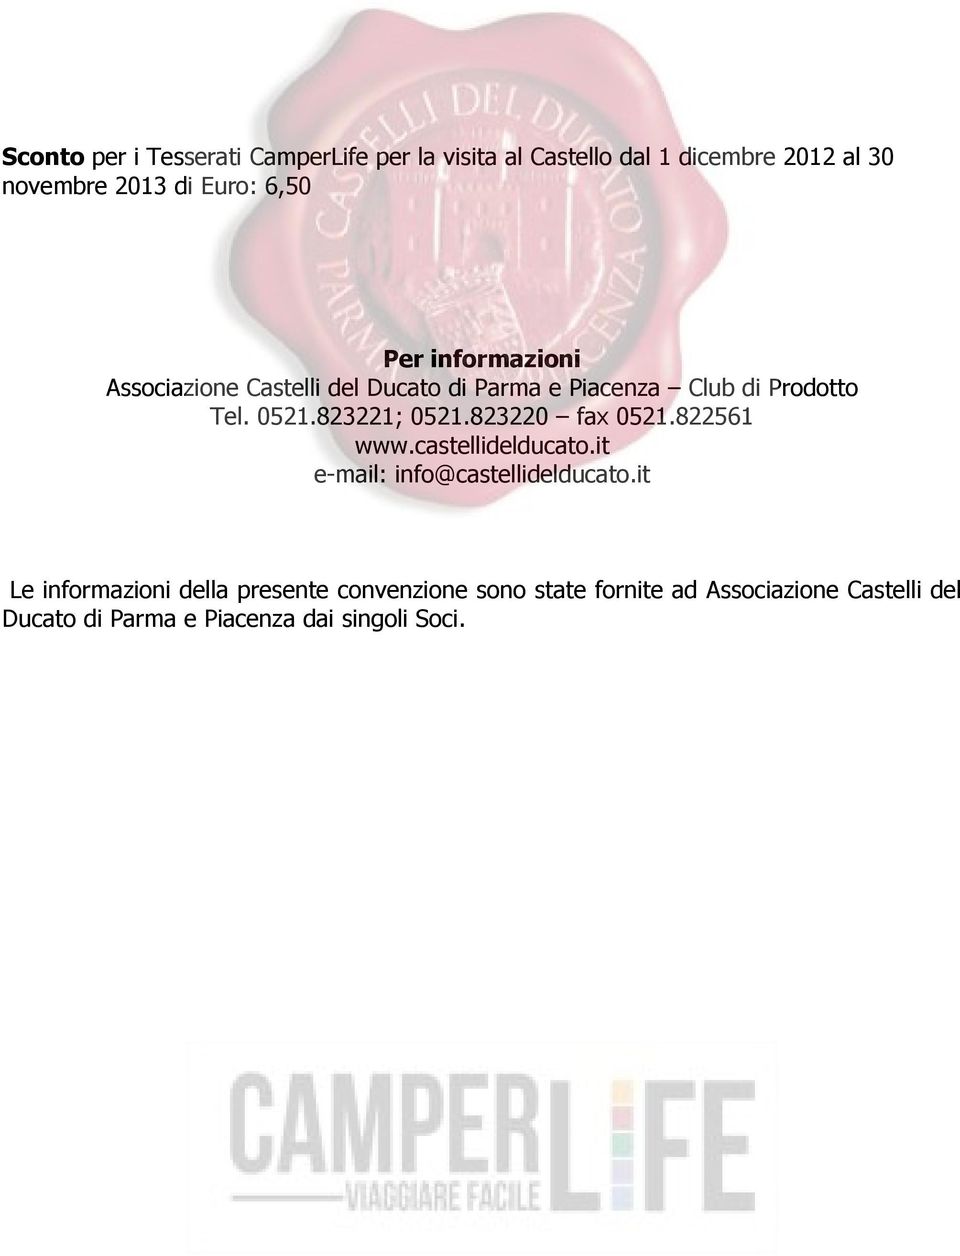 castellidelducato.it e-mail: info@castellidelducato.